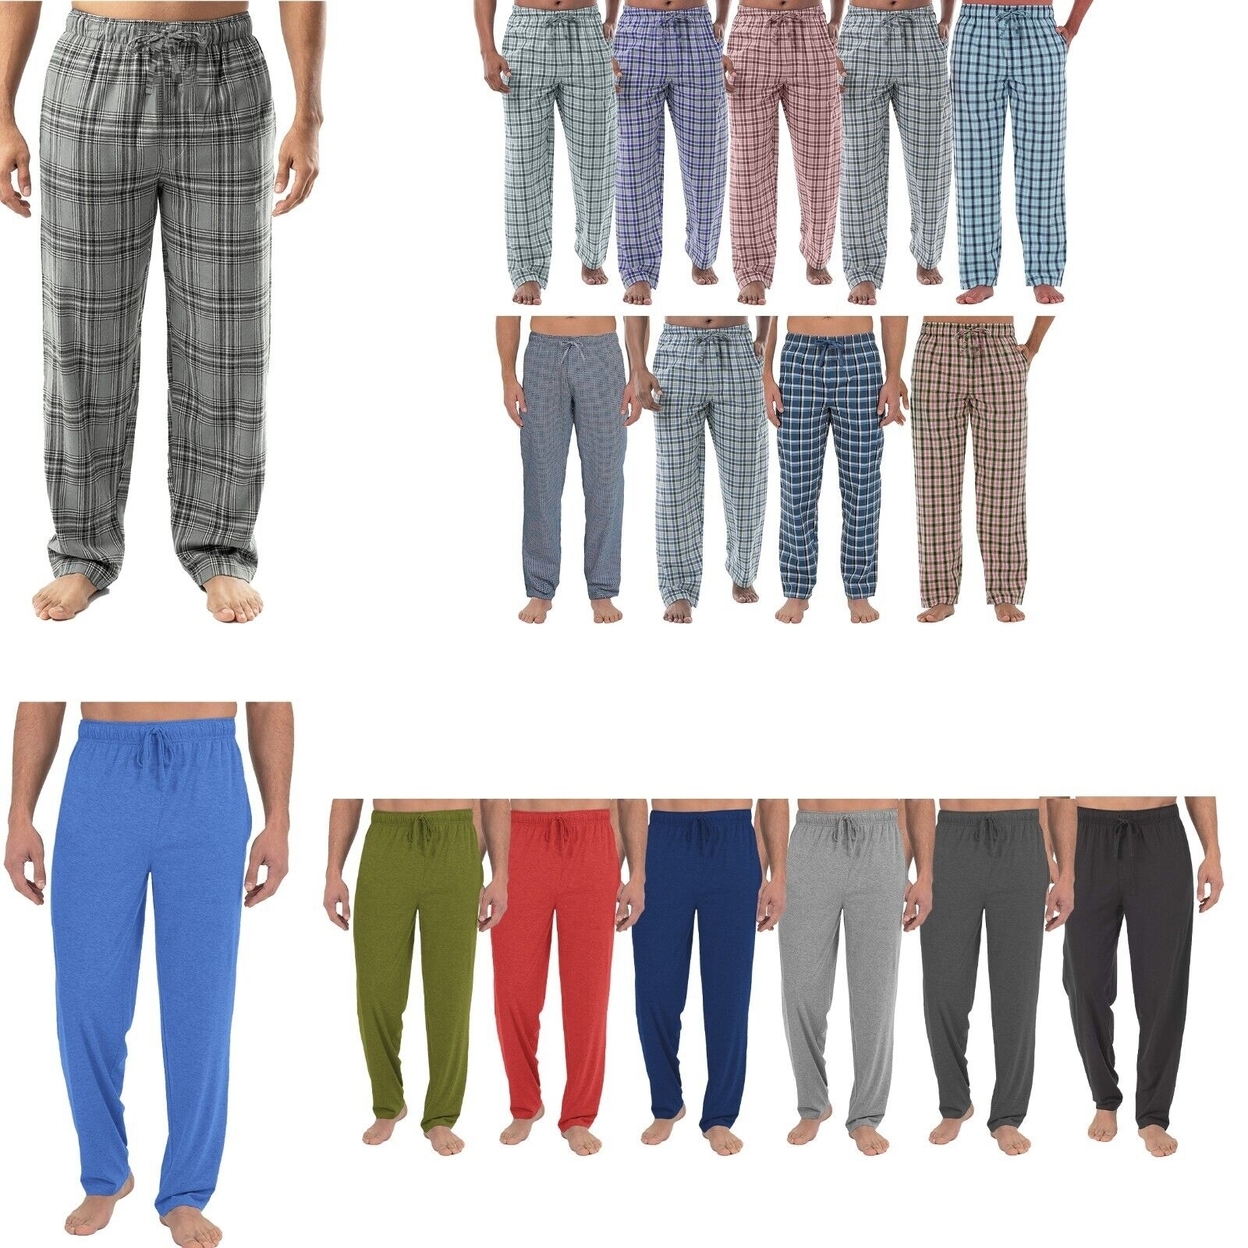 Men's Ultra-Soft Solid & Plaid Cotton Jersey Knit Comfy Sleep Lounge Pajama Pants - Plaid, Large